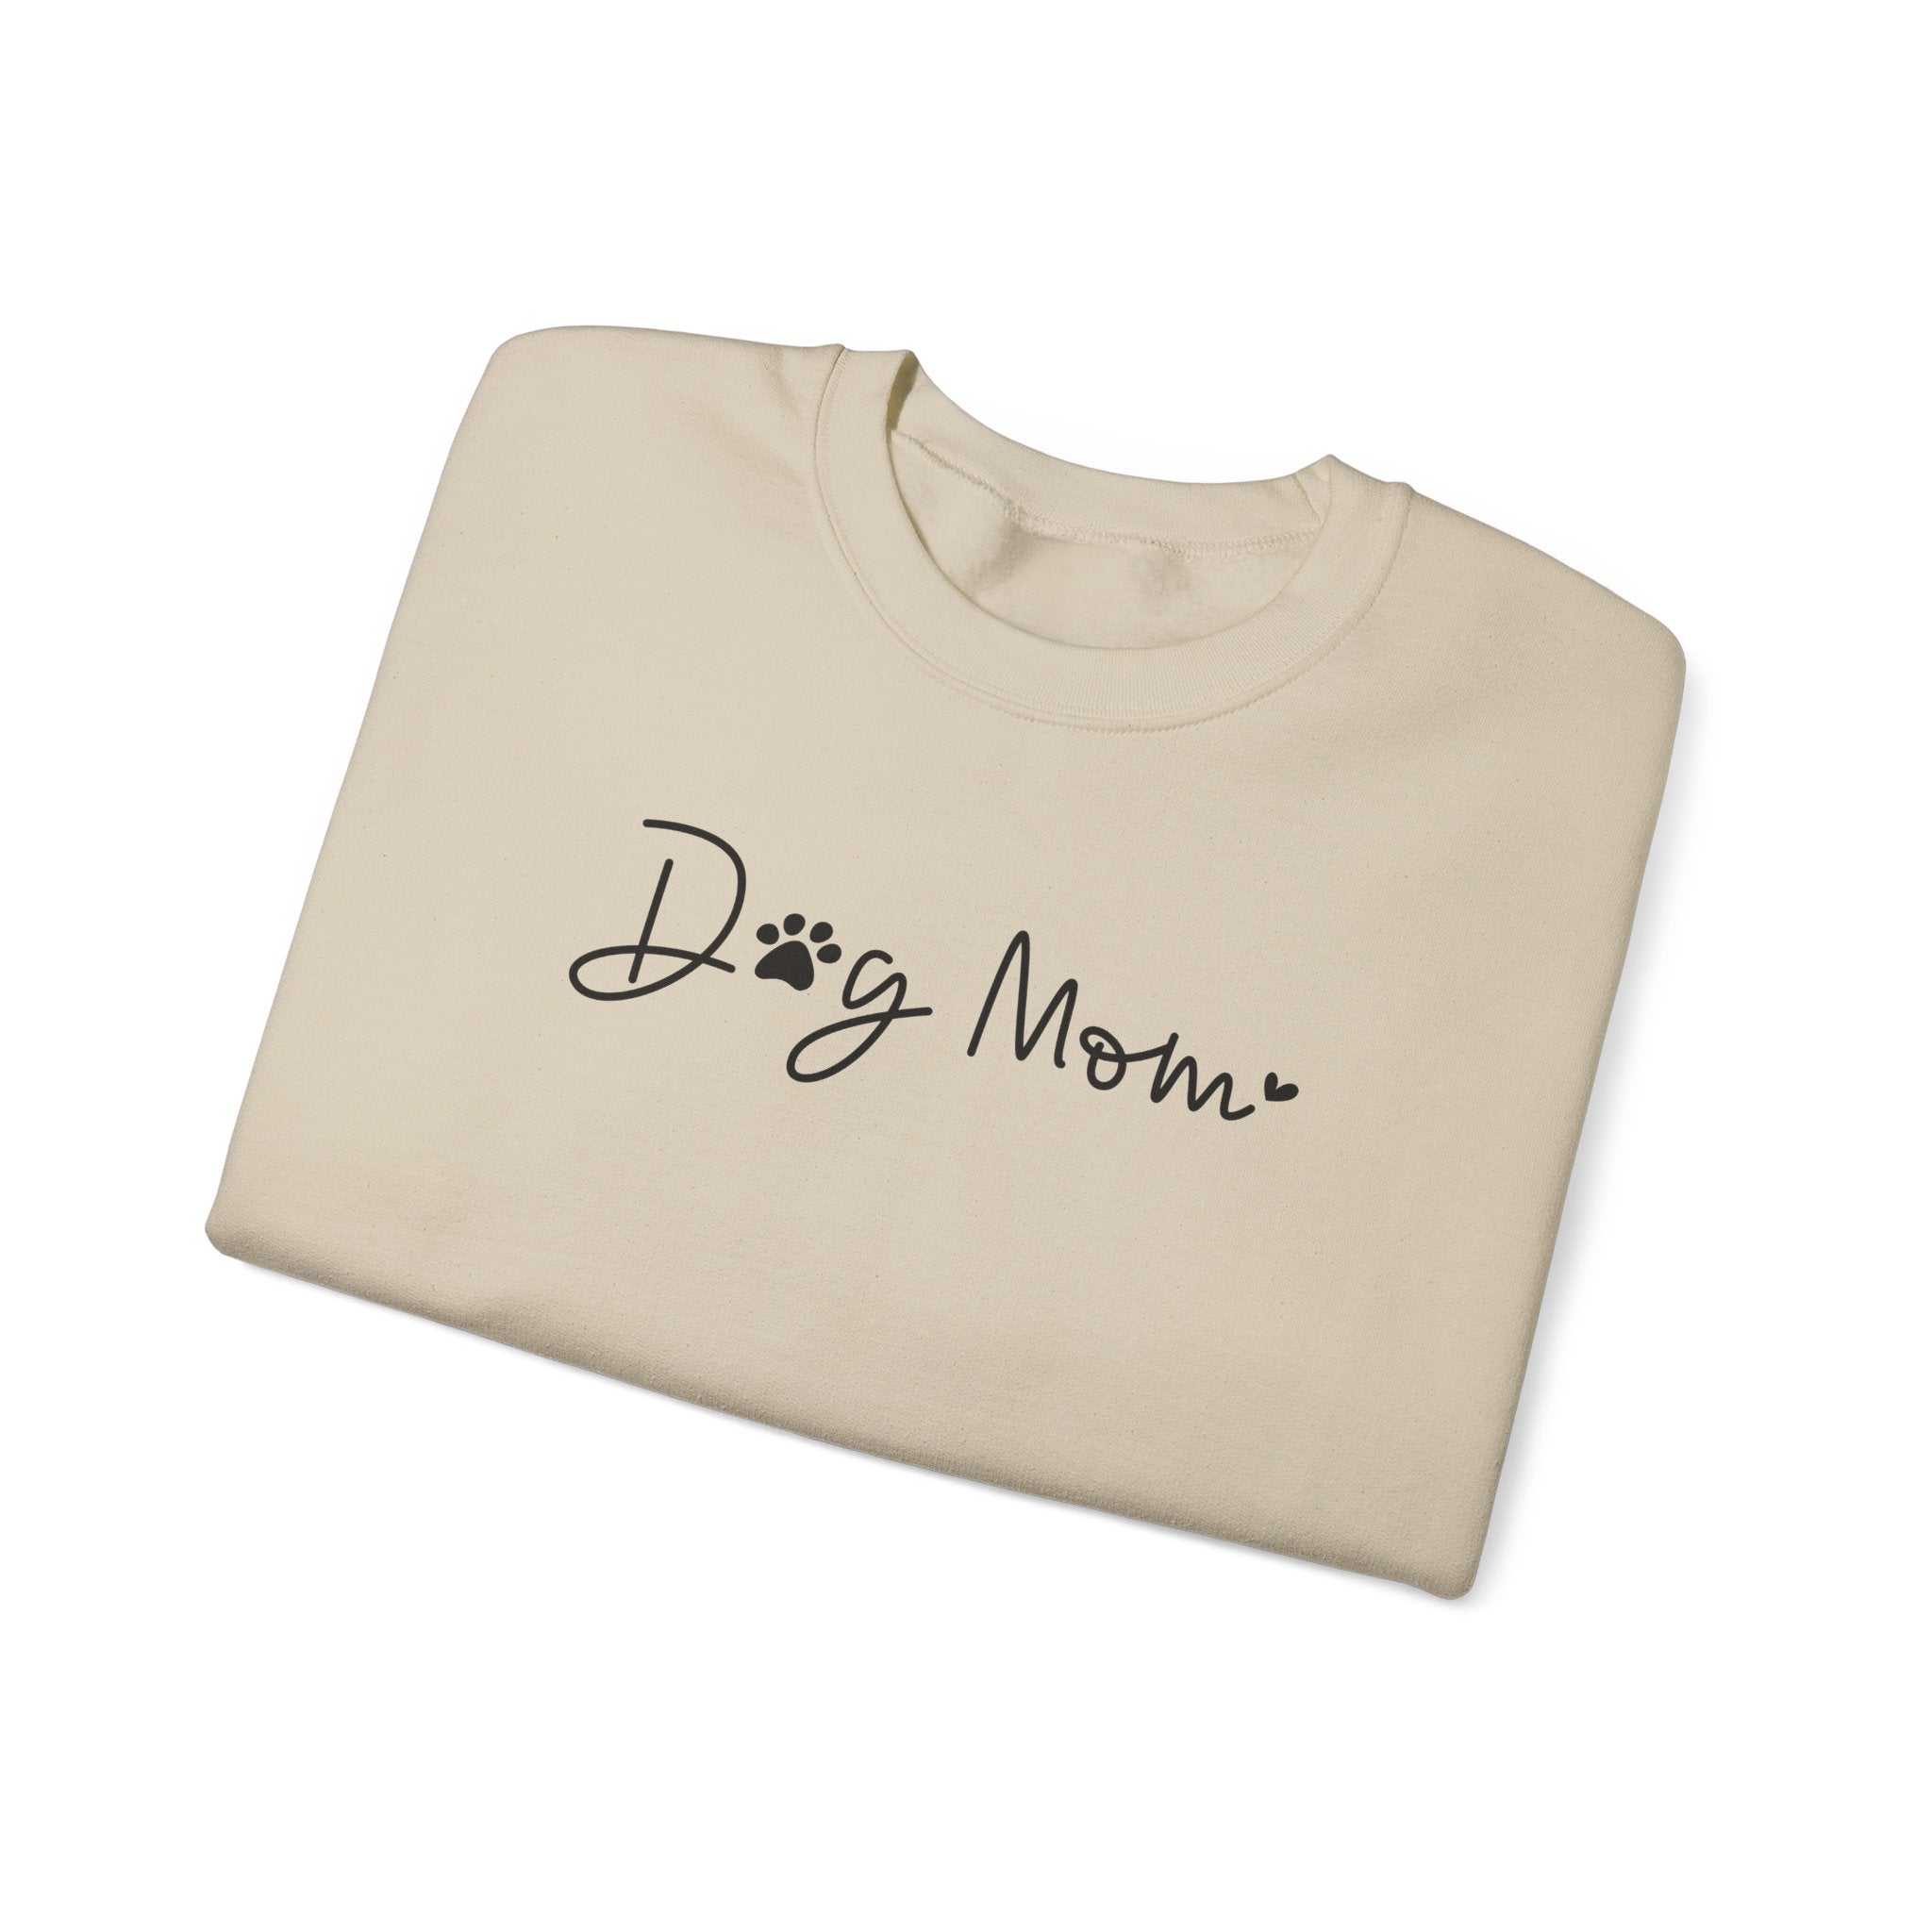 Dog Mom Heavy Blend™ Crewneck Sweatshirt Super Soft